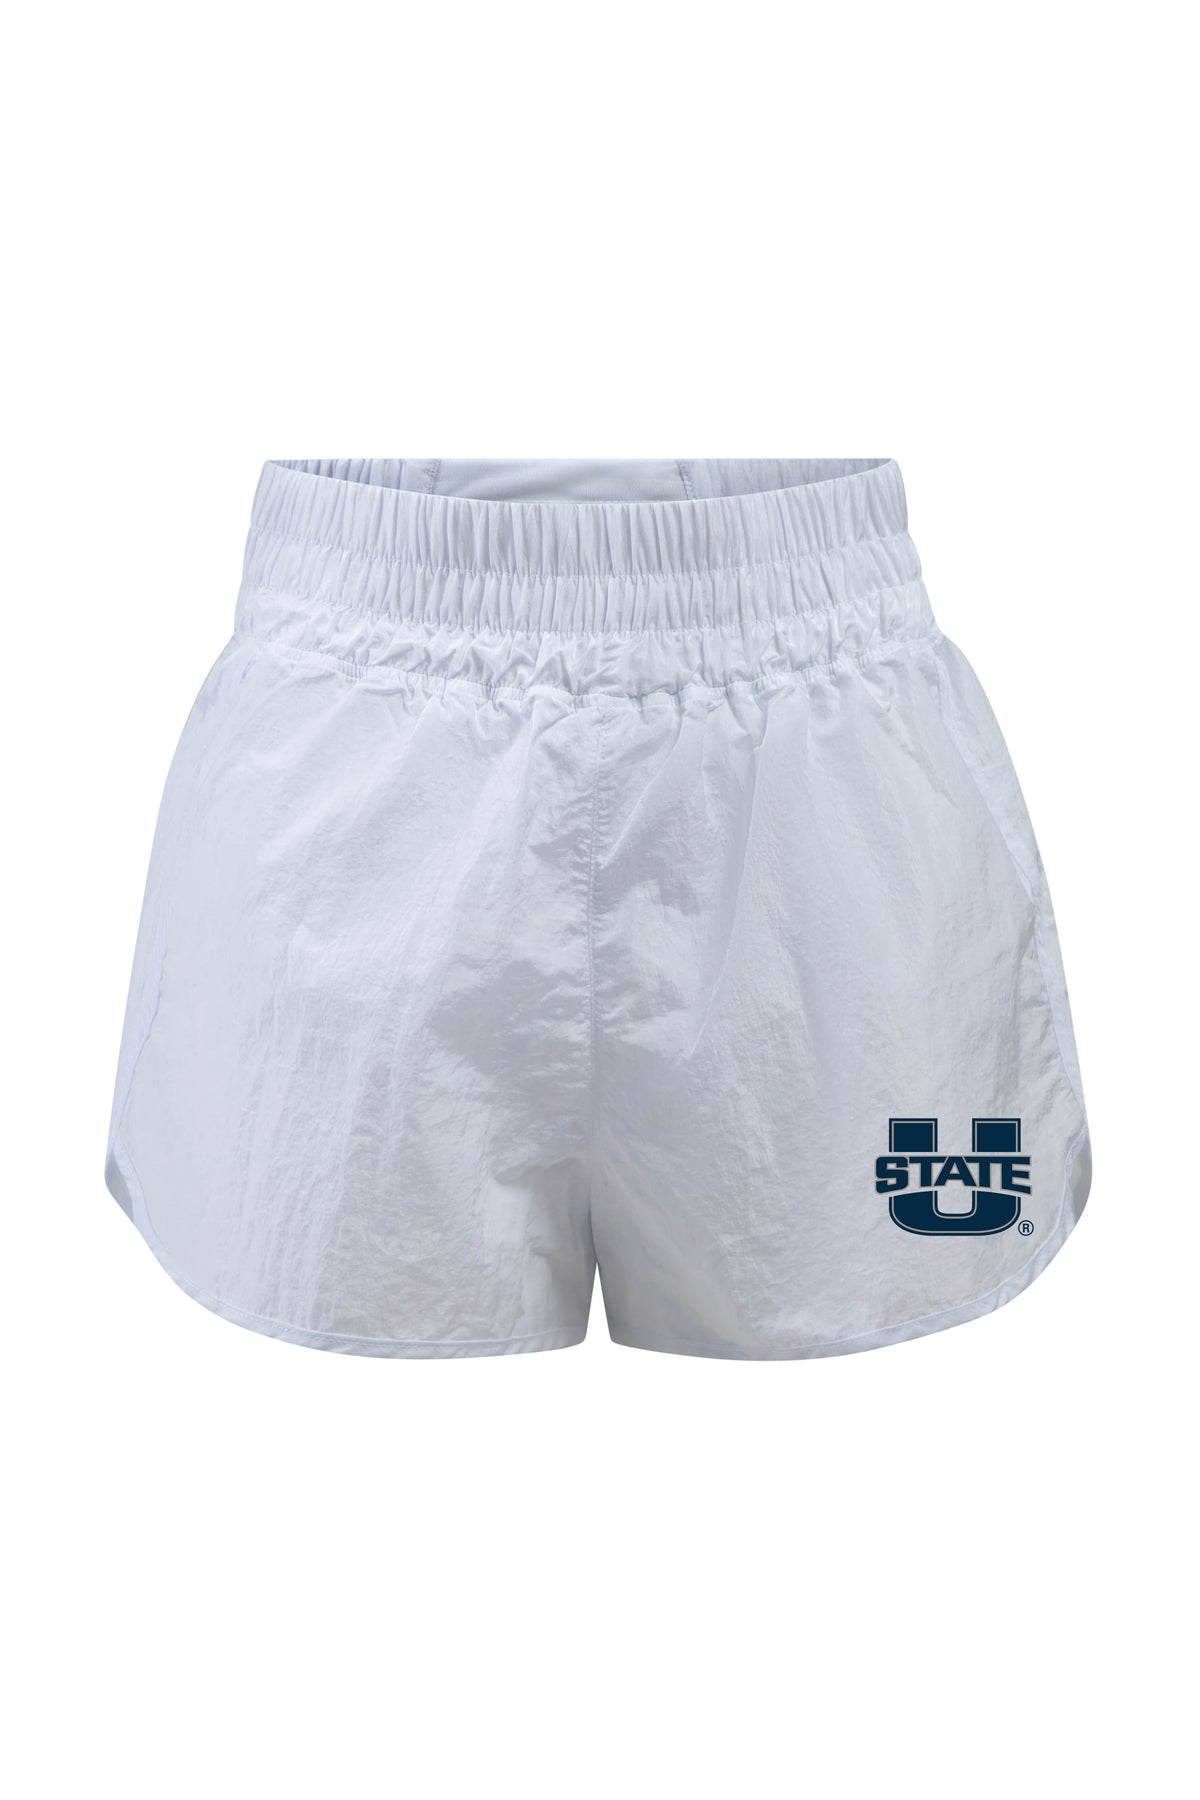 Utah State University Boxer Short